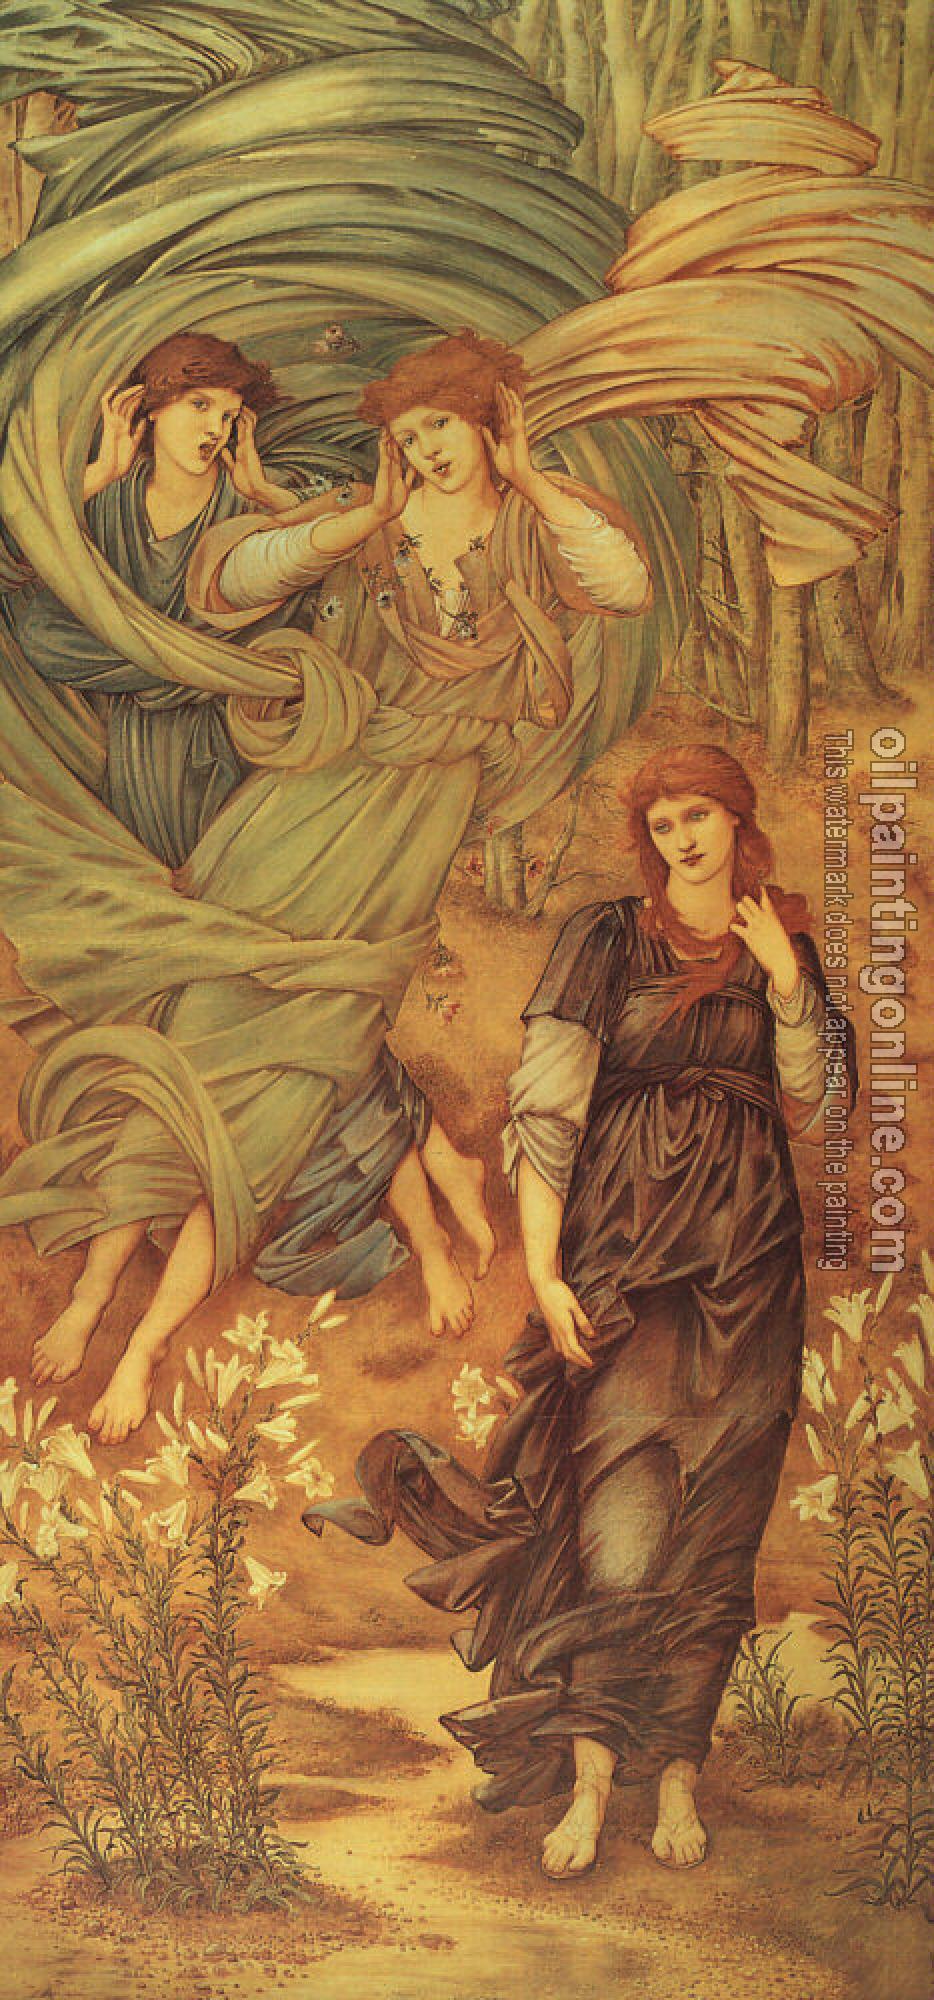 Burne-Jones, Sir Edward Coley - Sponsa de Libano (The Bride of Lebanon)